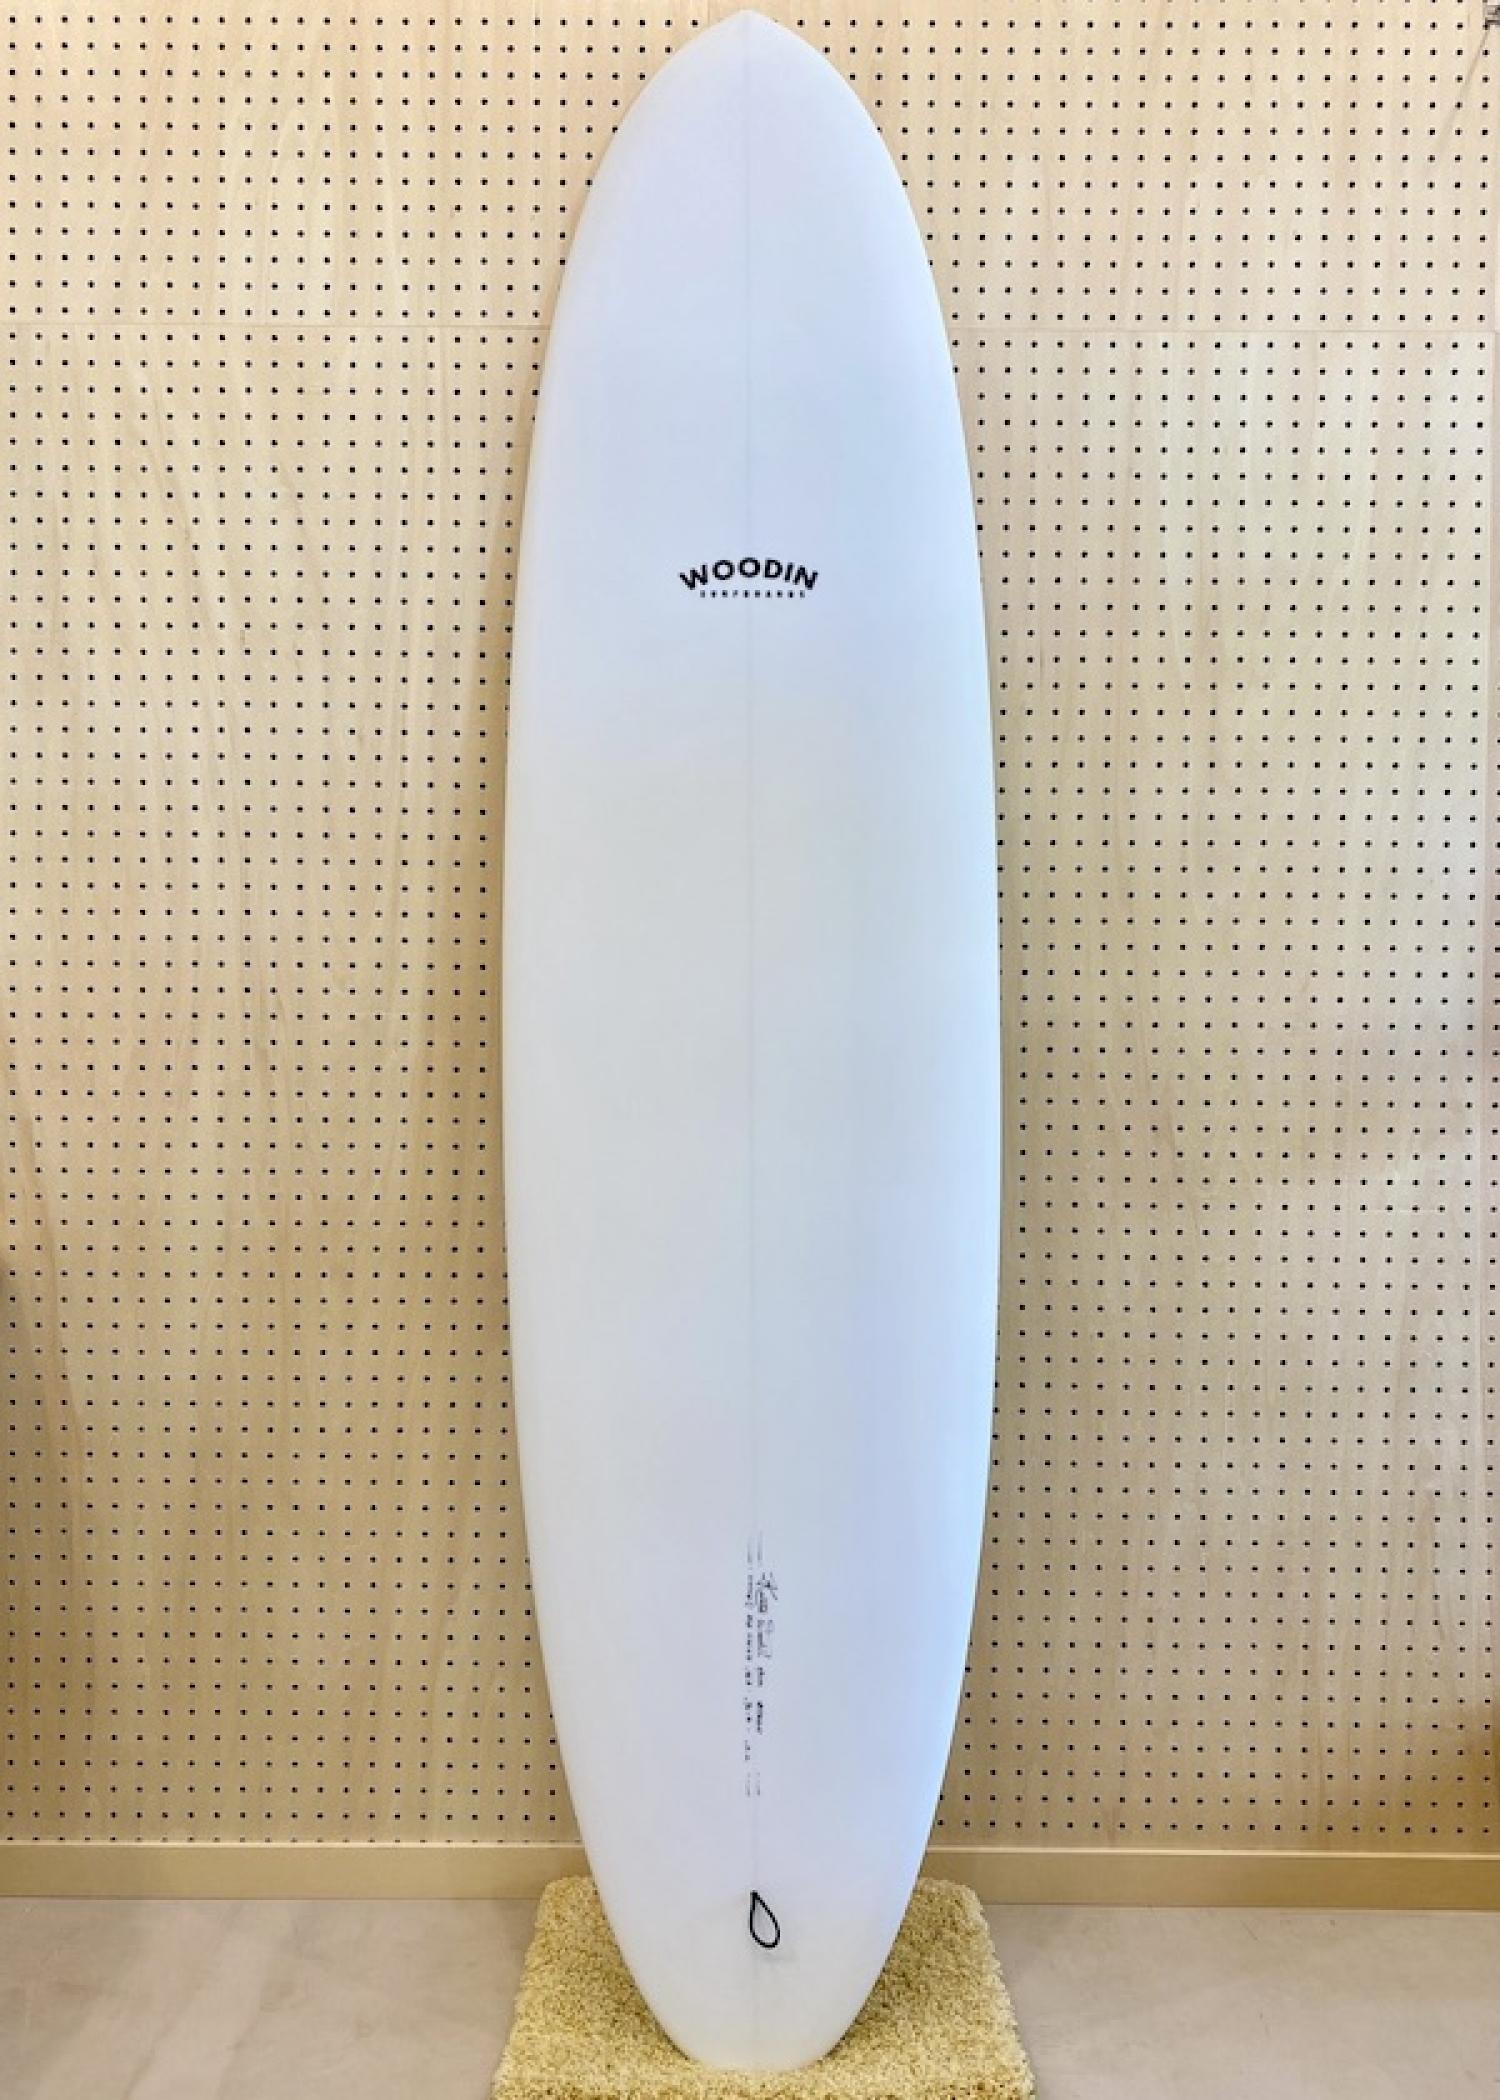 Woodin Surfboards|沖縄サーフィンショップ「YES SURF」